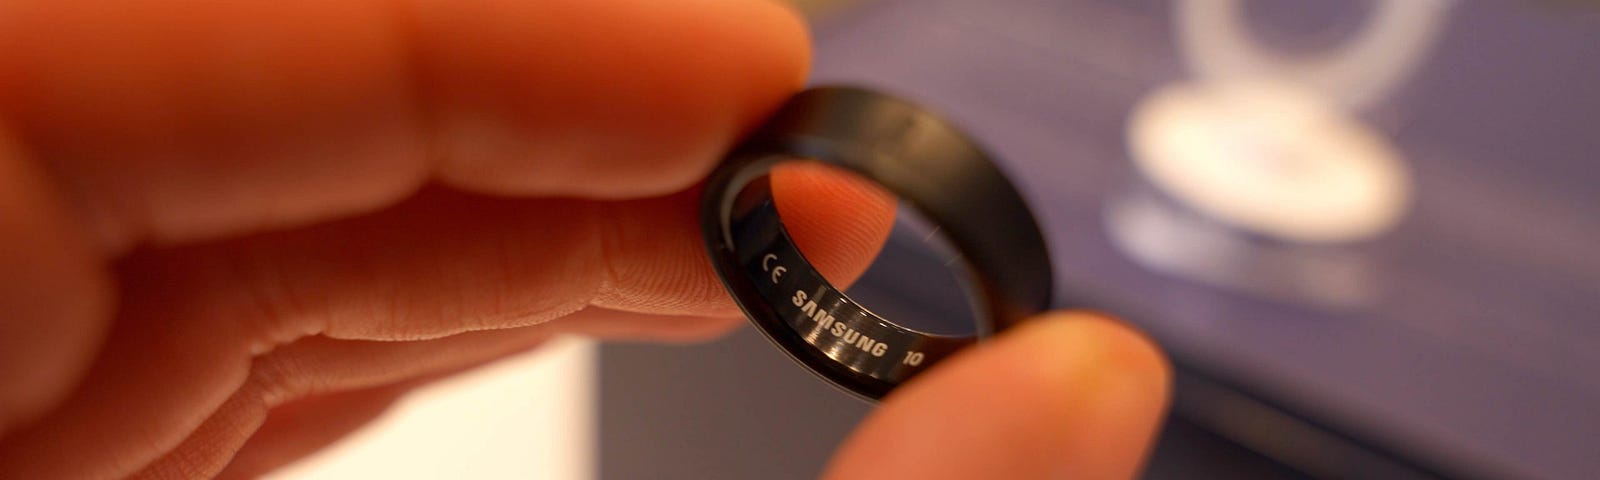 Black Samsung Galaxy ring in Mark Ellis’ hand